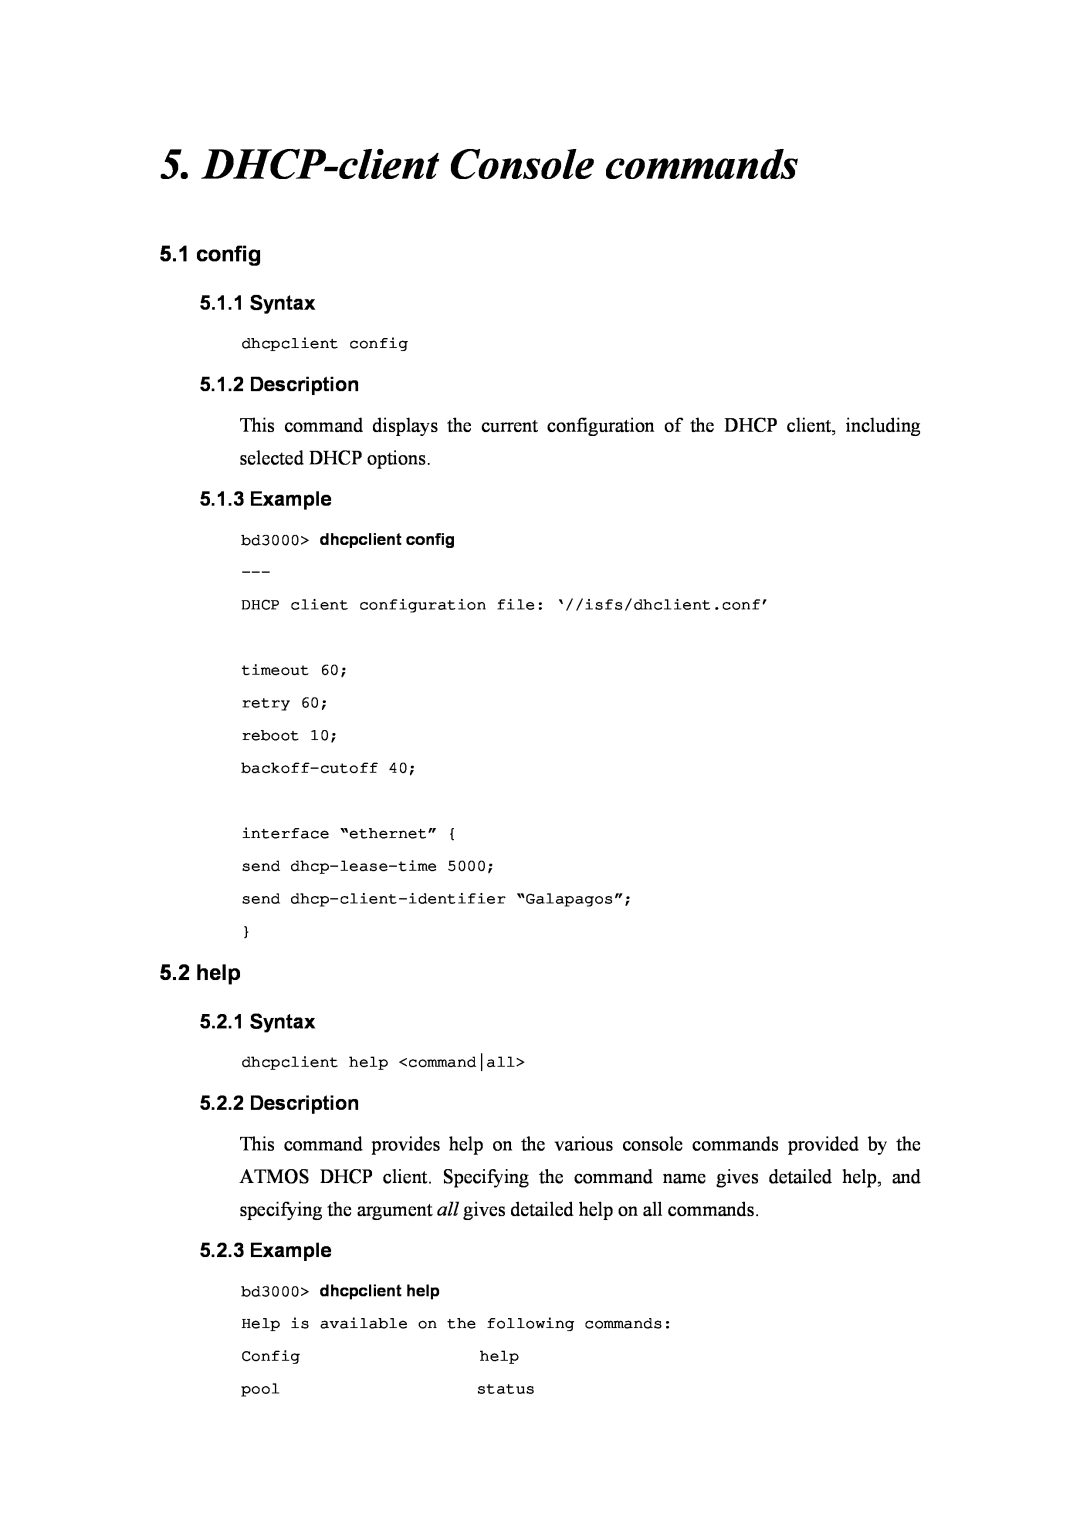 Atlantis Land A02-RA(Atmos)_ME01 manual DHCP-client Console commands, config, help, Syntax, Description, Example 